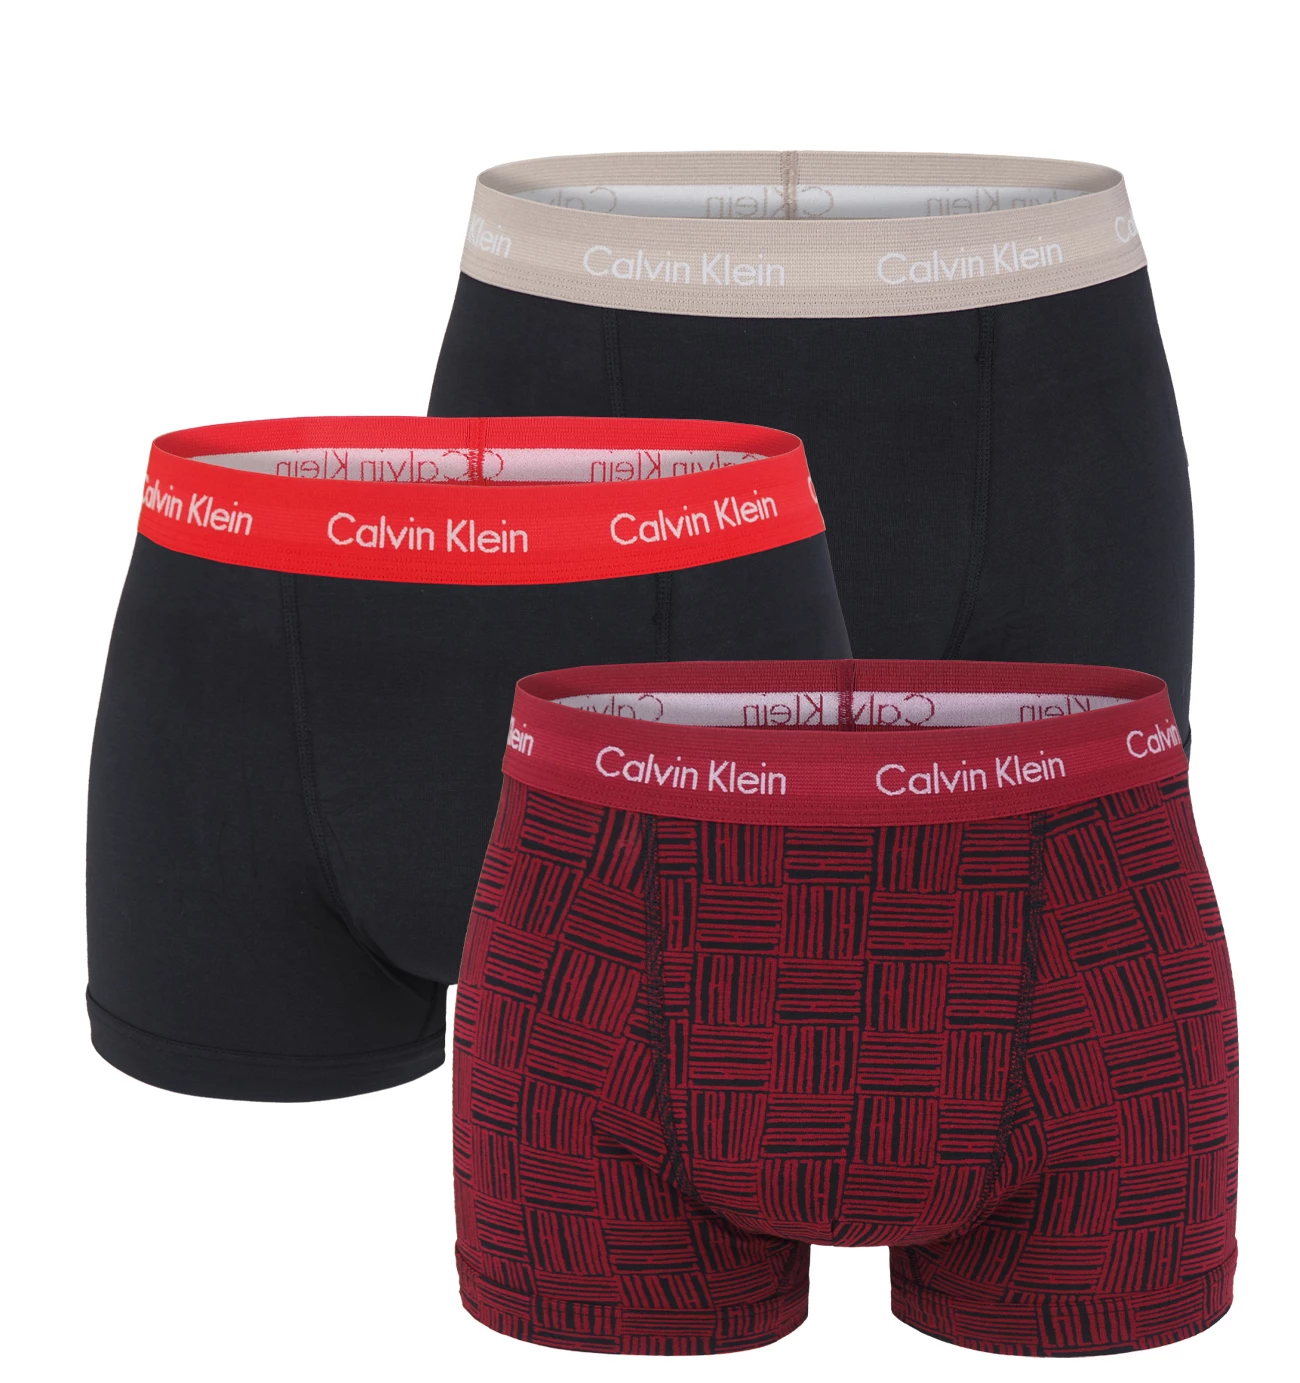 CALVIN KLEIN - boxerky 3PACK cotton stretch classic CALVIN black logo - limitovaná edícia